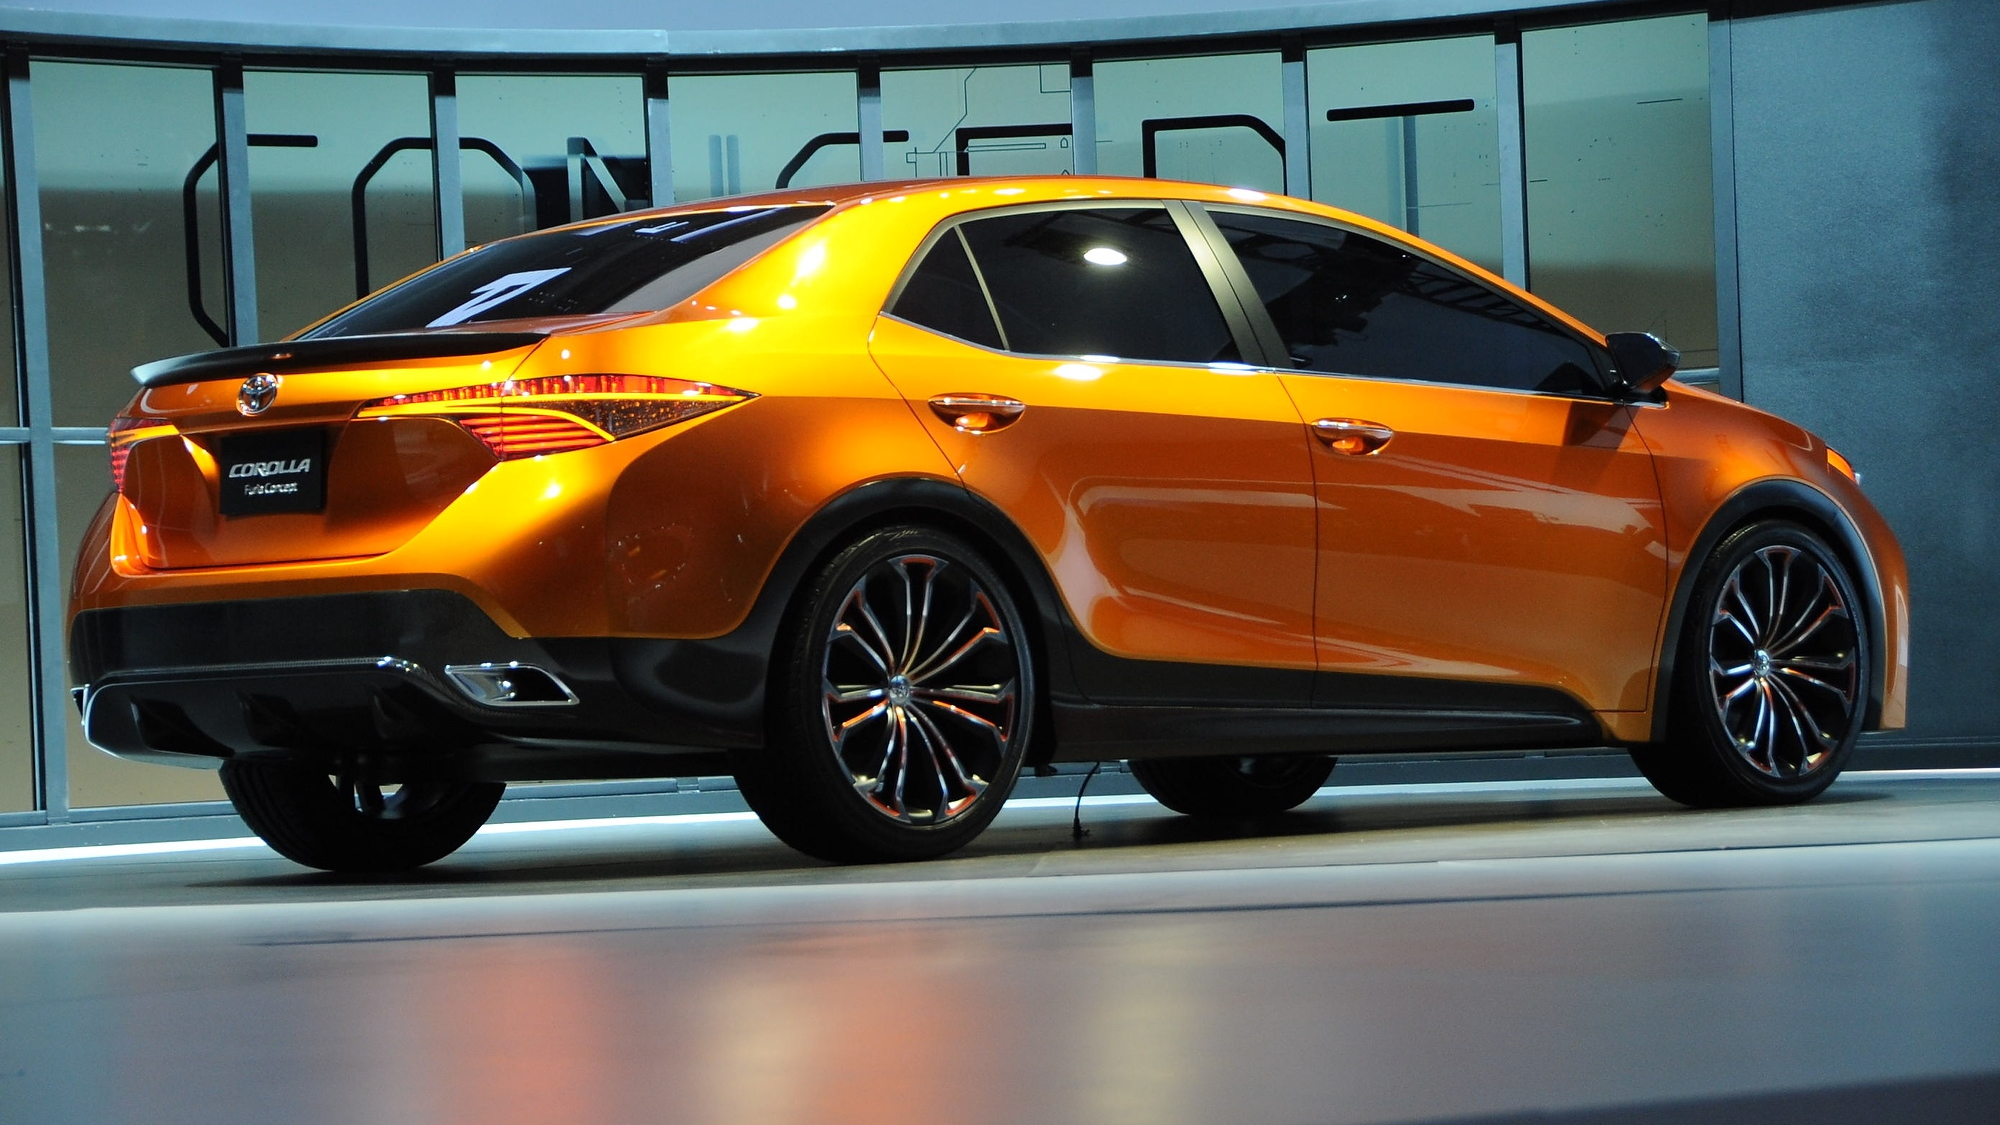 Toyota Furia Concept revealed at 2013 Detroit Auto Show